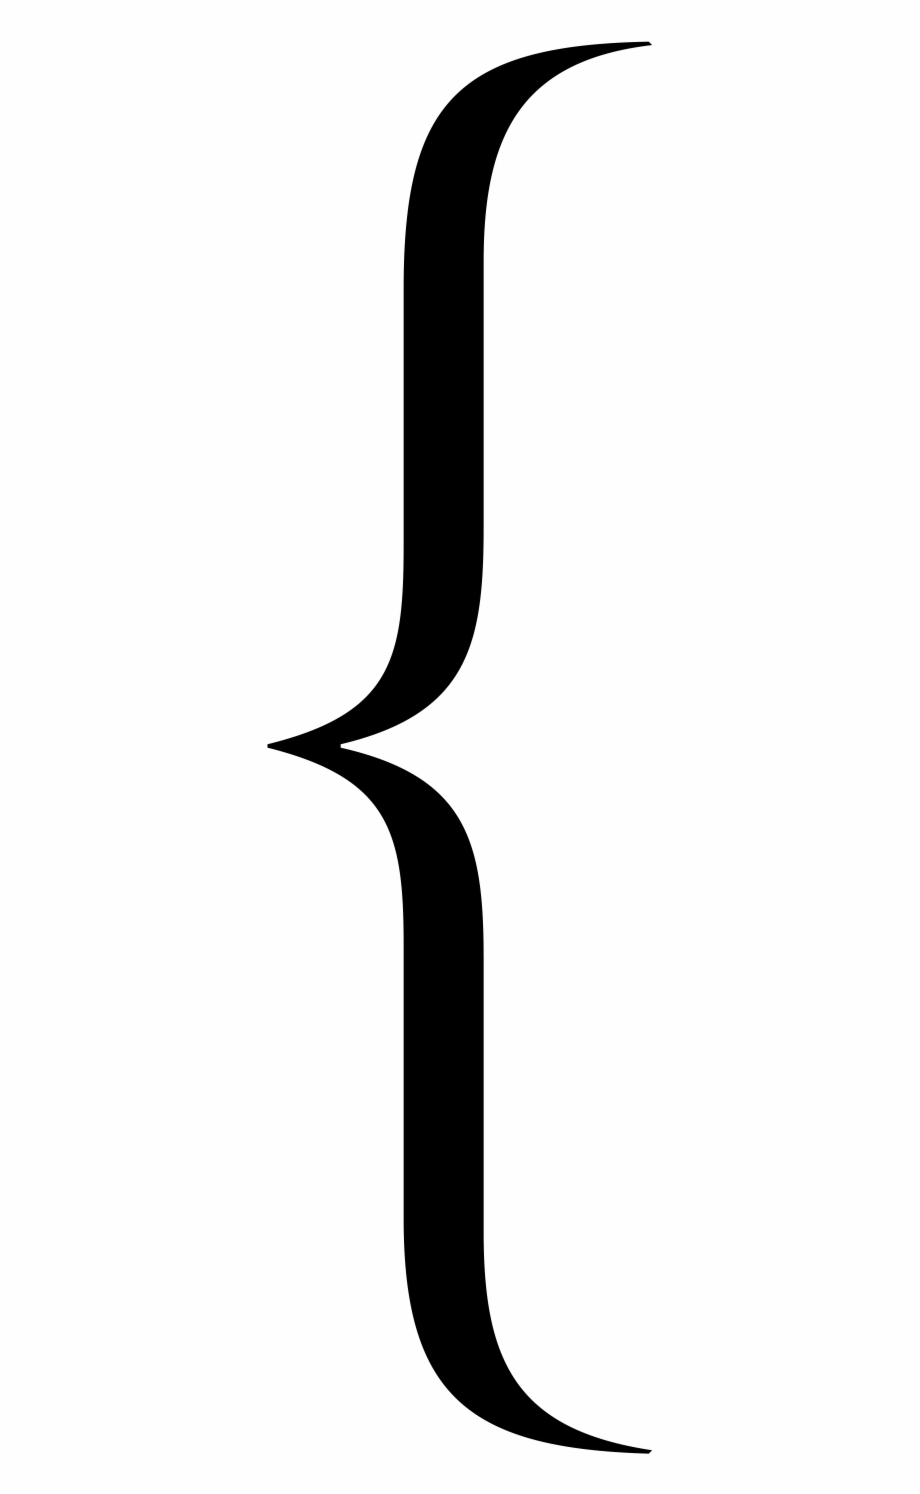 curly brackets symbol